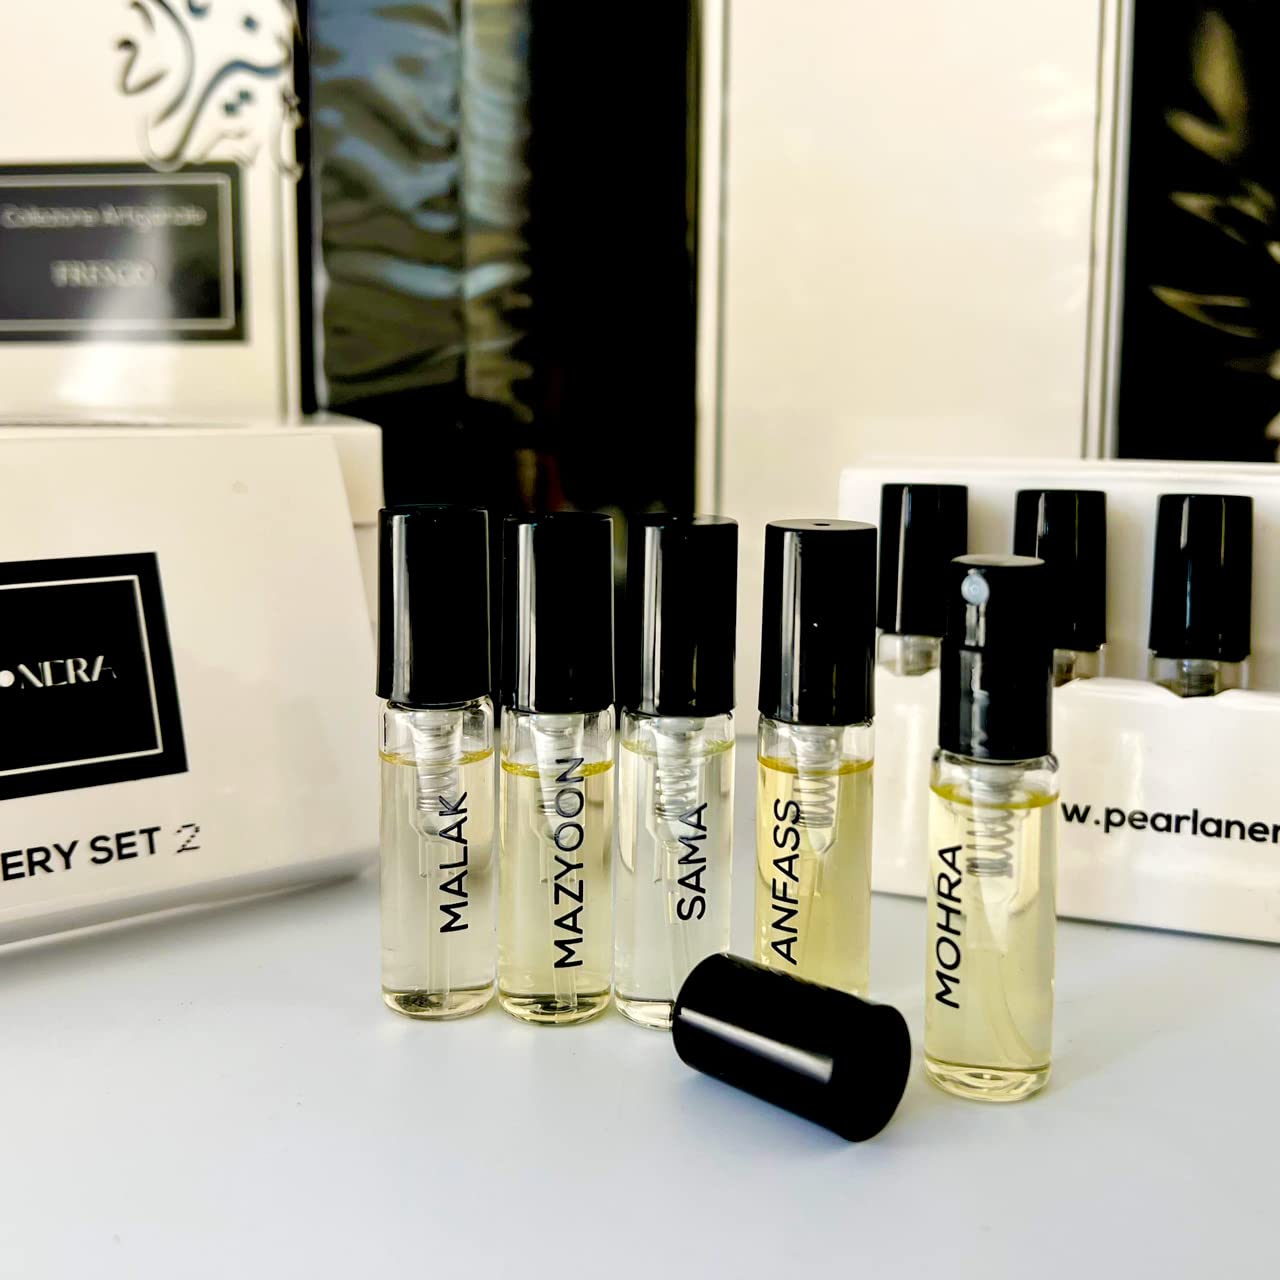 Chanel Bleu de Chanel Parfum 3 X Spray Samples 1.5ml / 0.05oz each.New